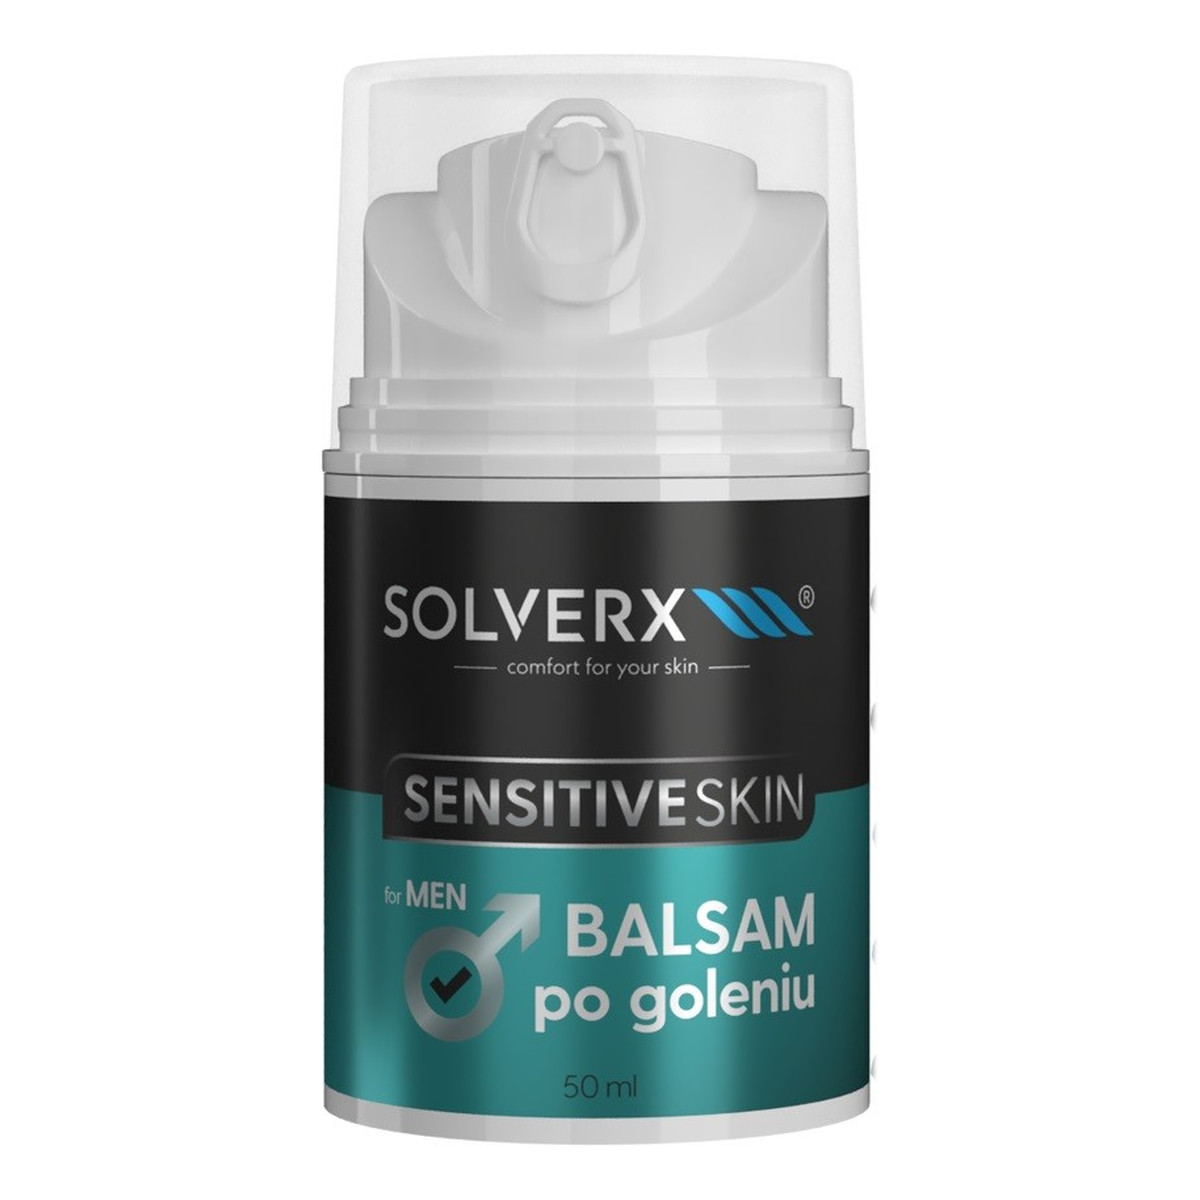 Solverx Sensitive Skin Men Balsam po goleniu 50ml